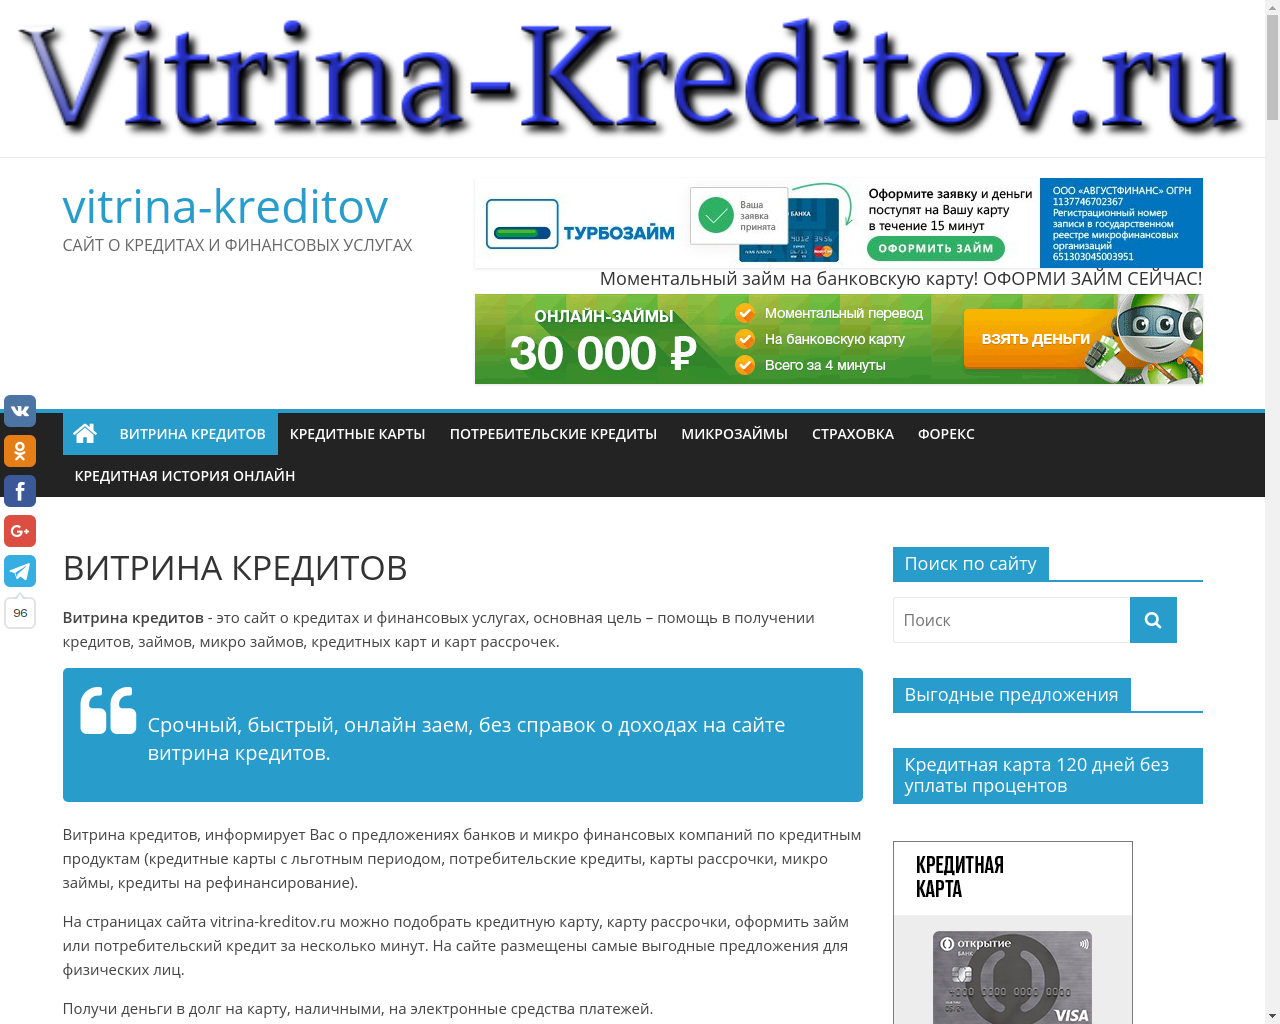 Изображение сайта vitrina-kreditov.ru в разрешении 1280x1024